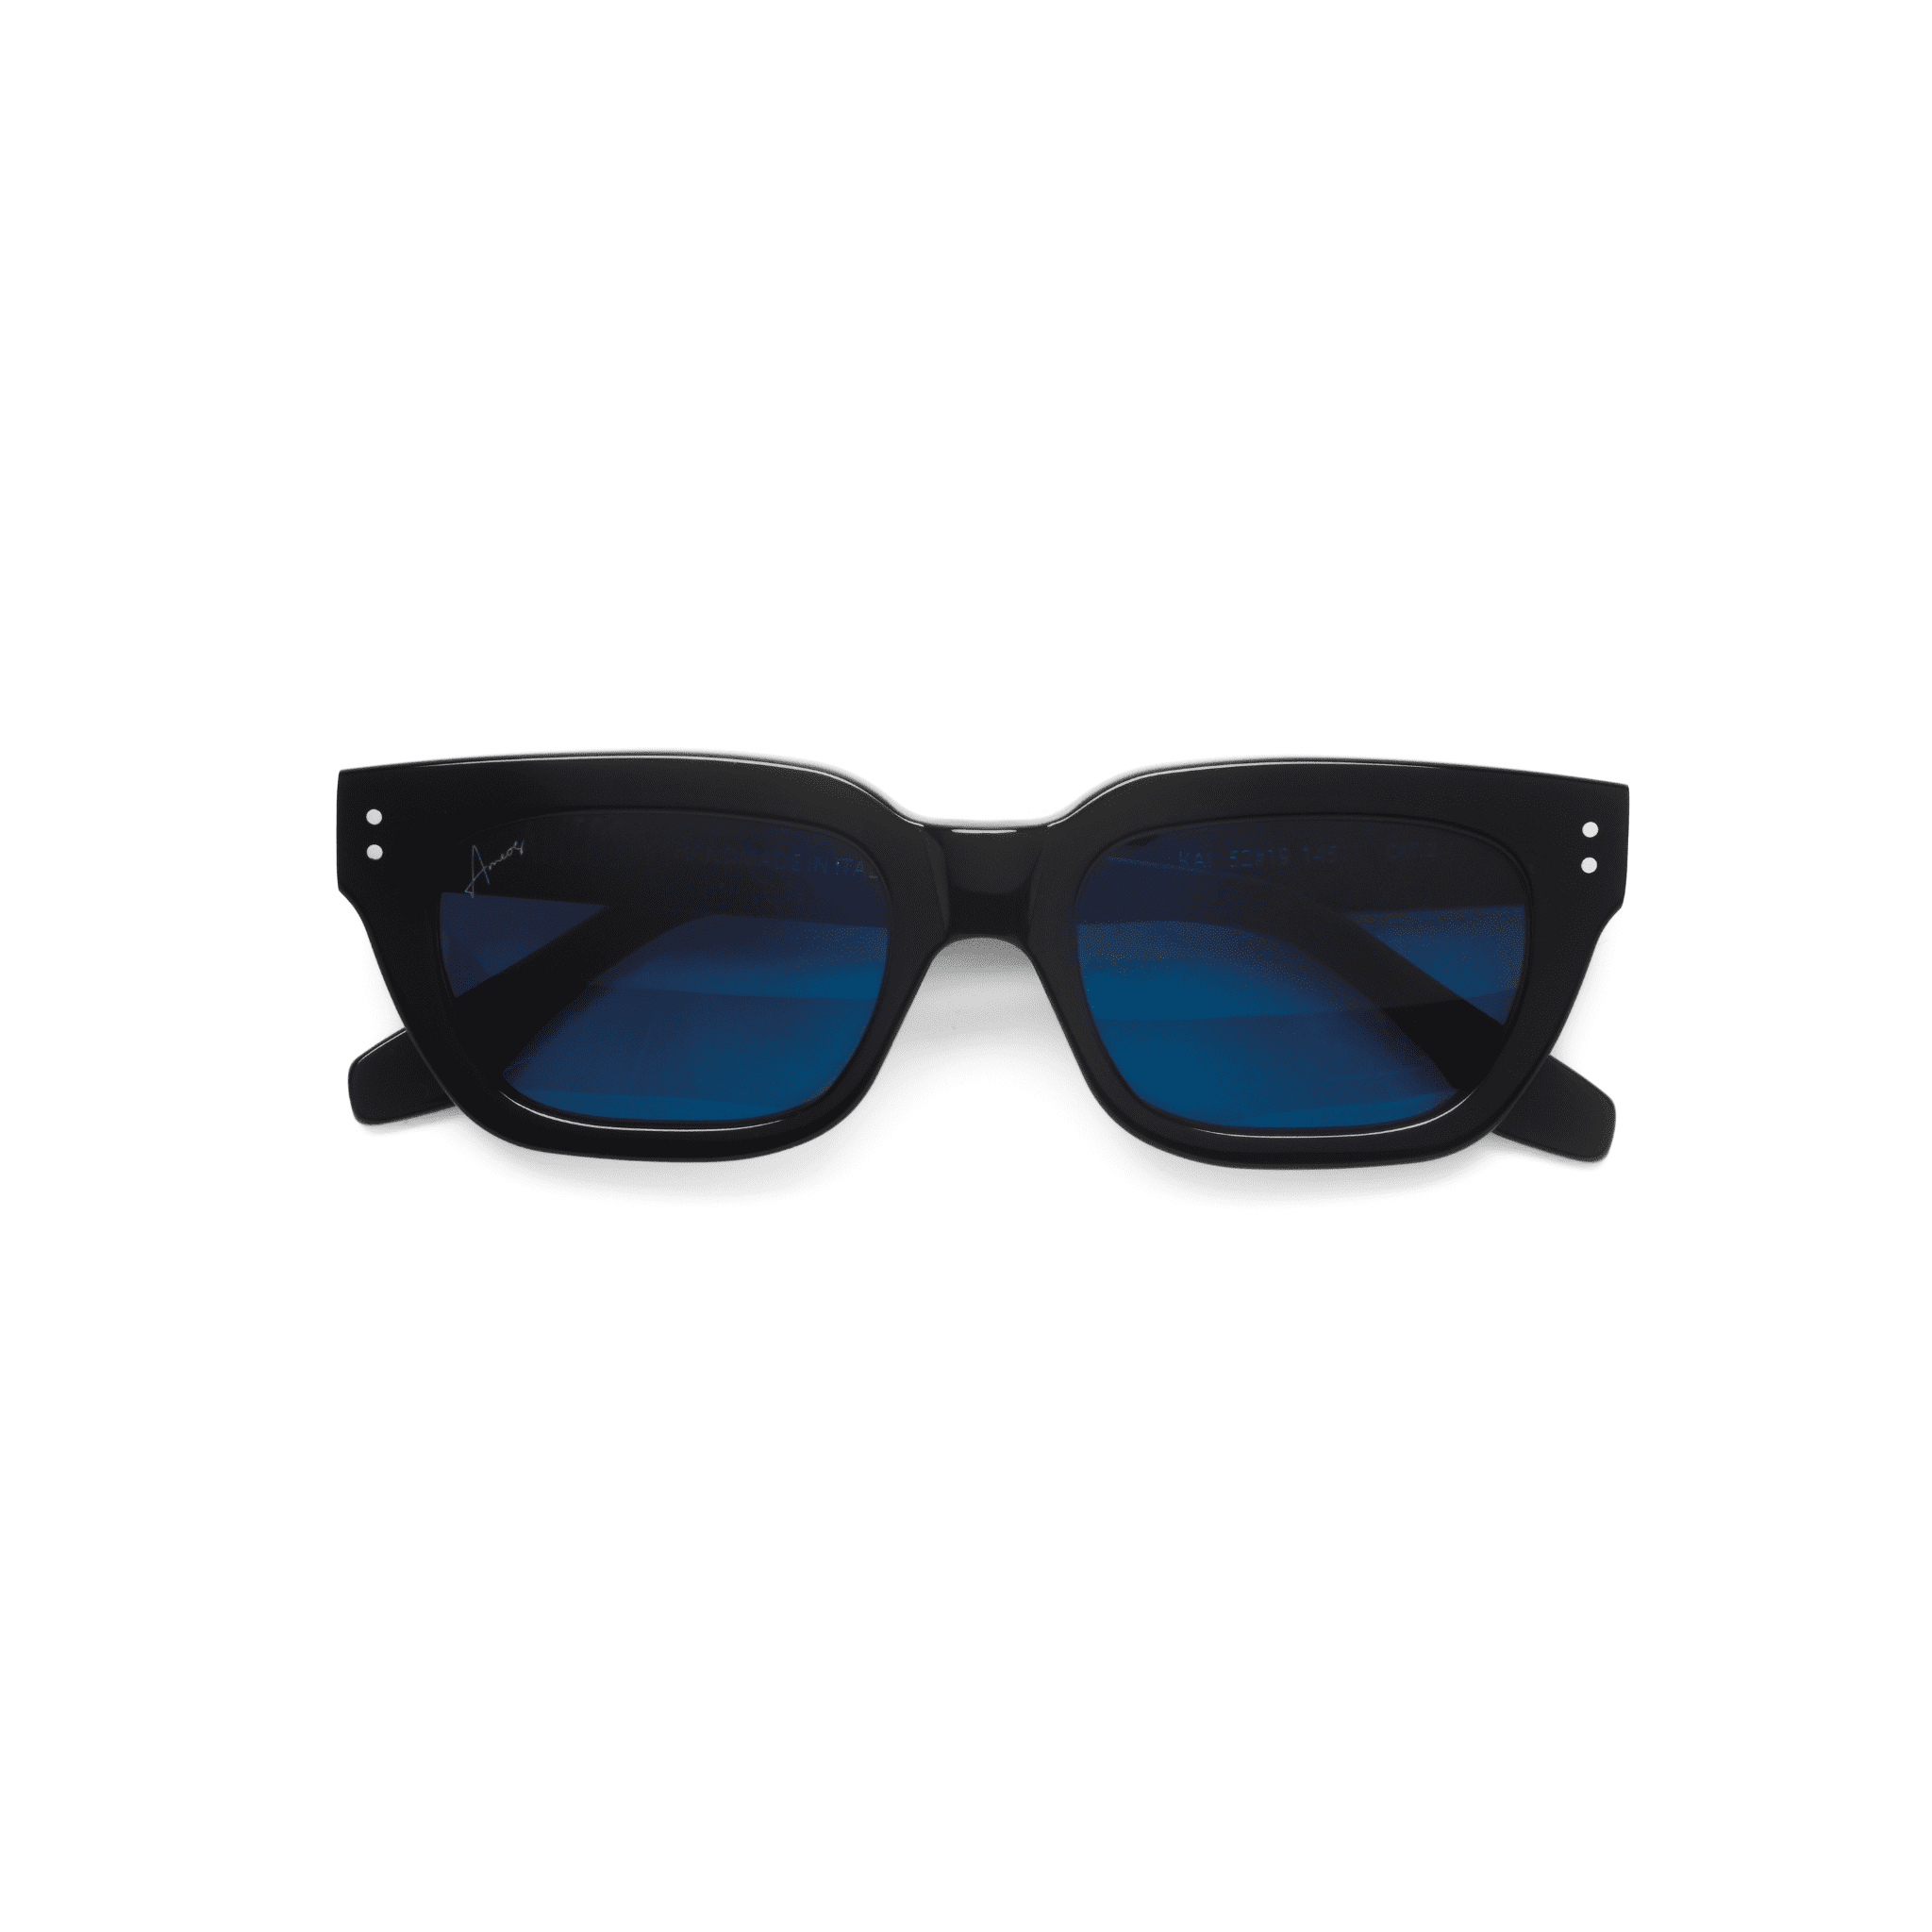 Ameos Forever collection Kai model. Black frames with dark blue lenses. Front view temples crossed. Genderless, gender neutral eyewear